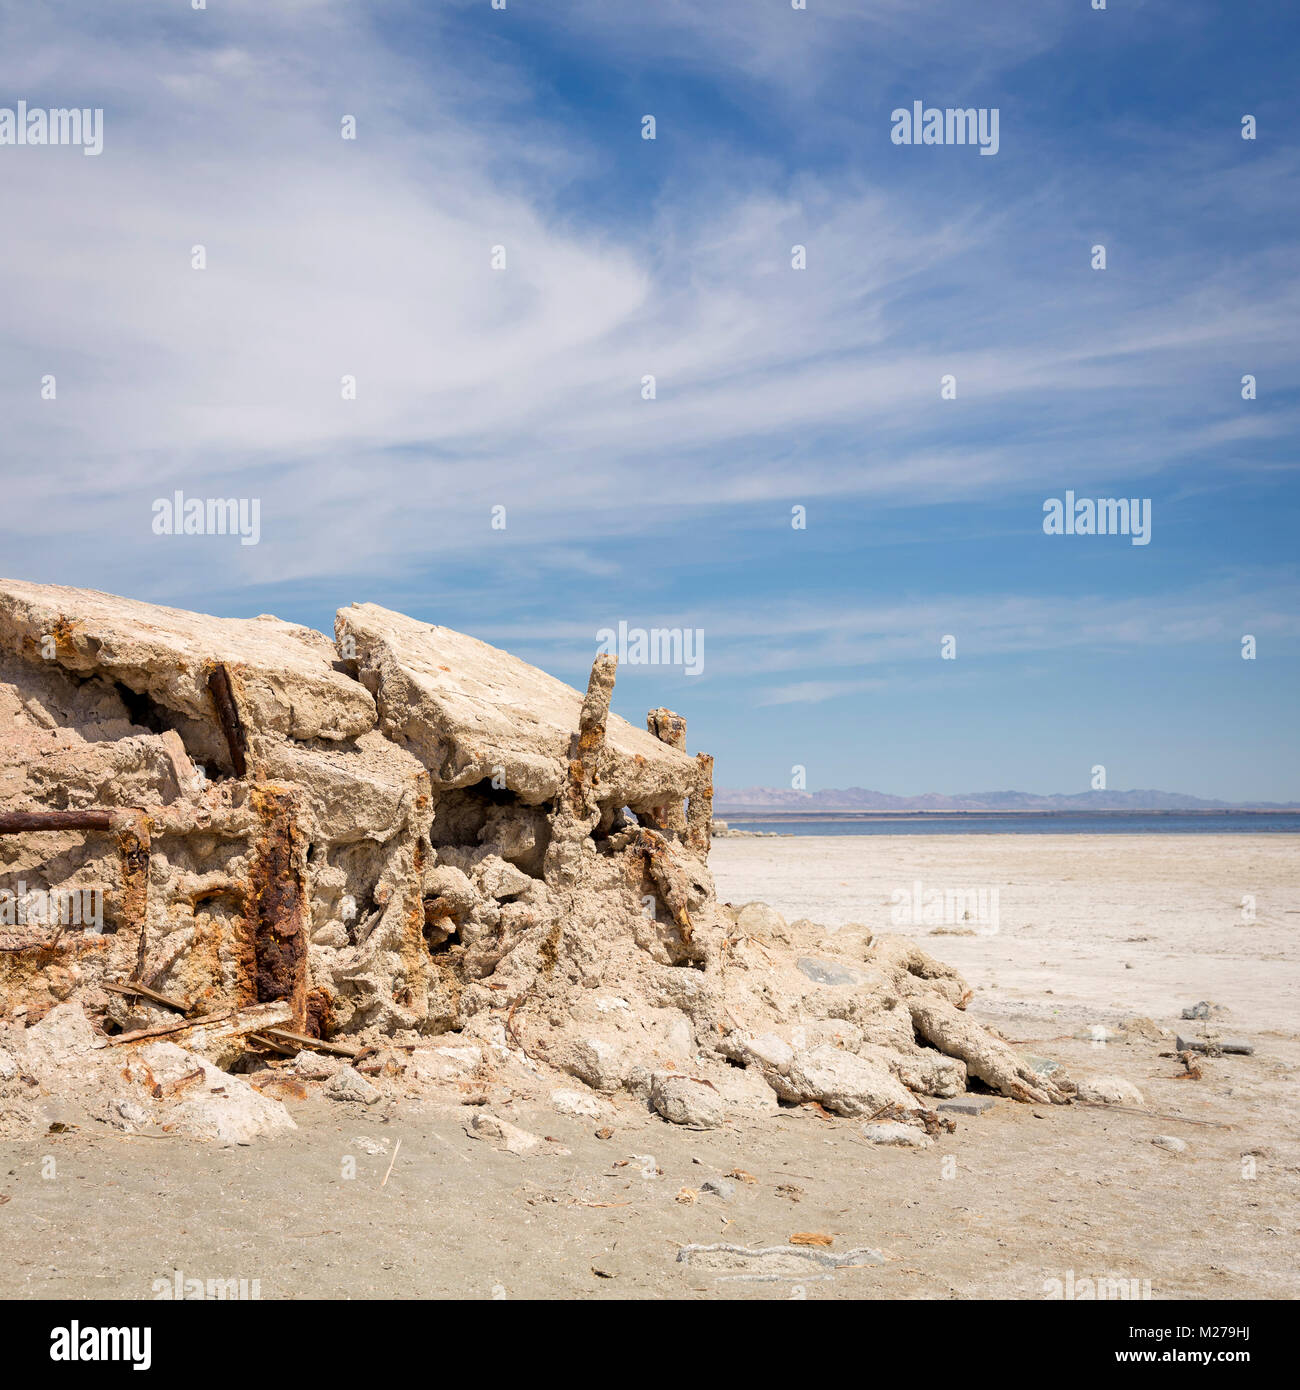 Abandoned Debris at Bomby Beach, The Salton Sea, California Stock Photo